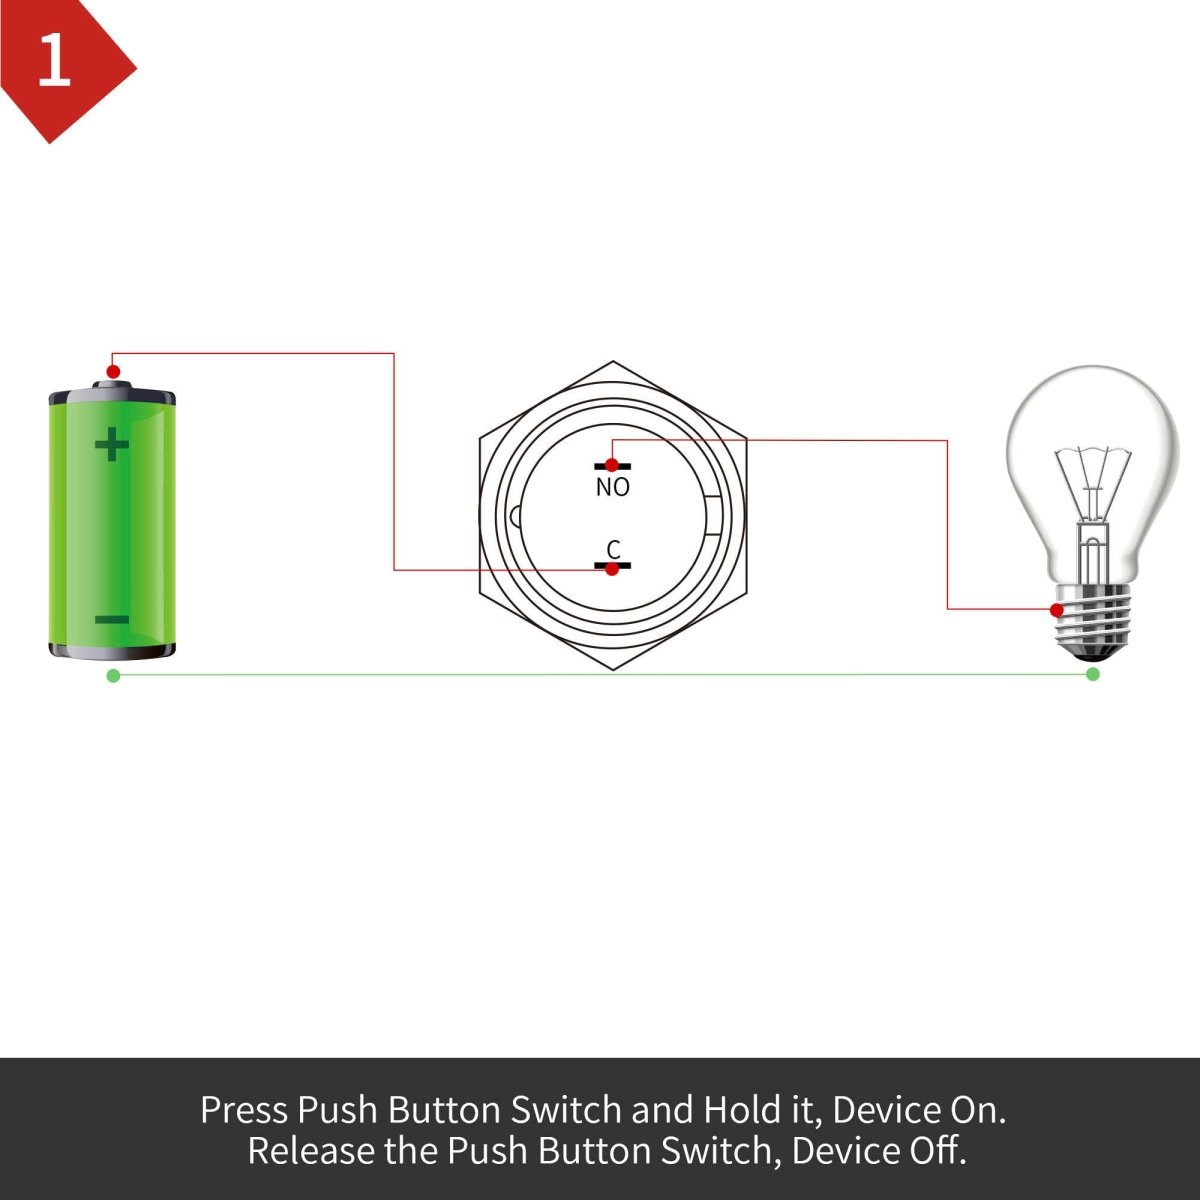 16mm Momentary Push Button Switch High Round Cap Waterproof High Flush Screw Terminals 1NO SPST - Yellow-